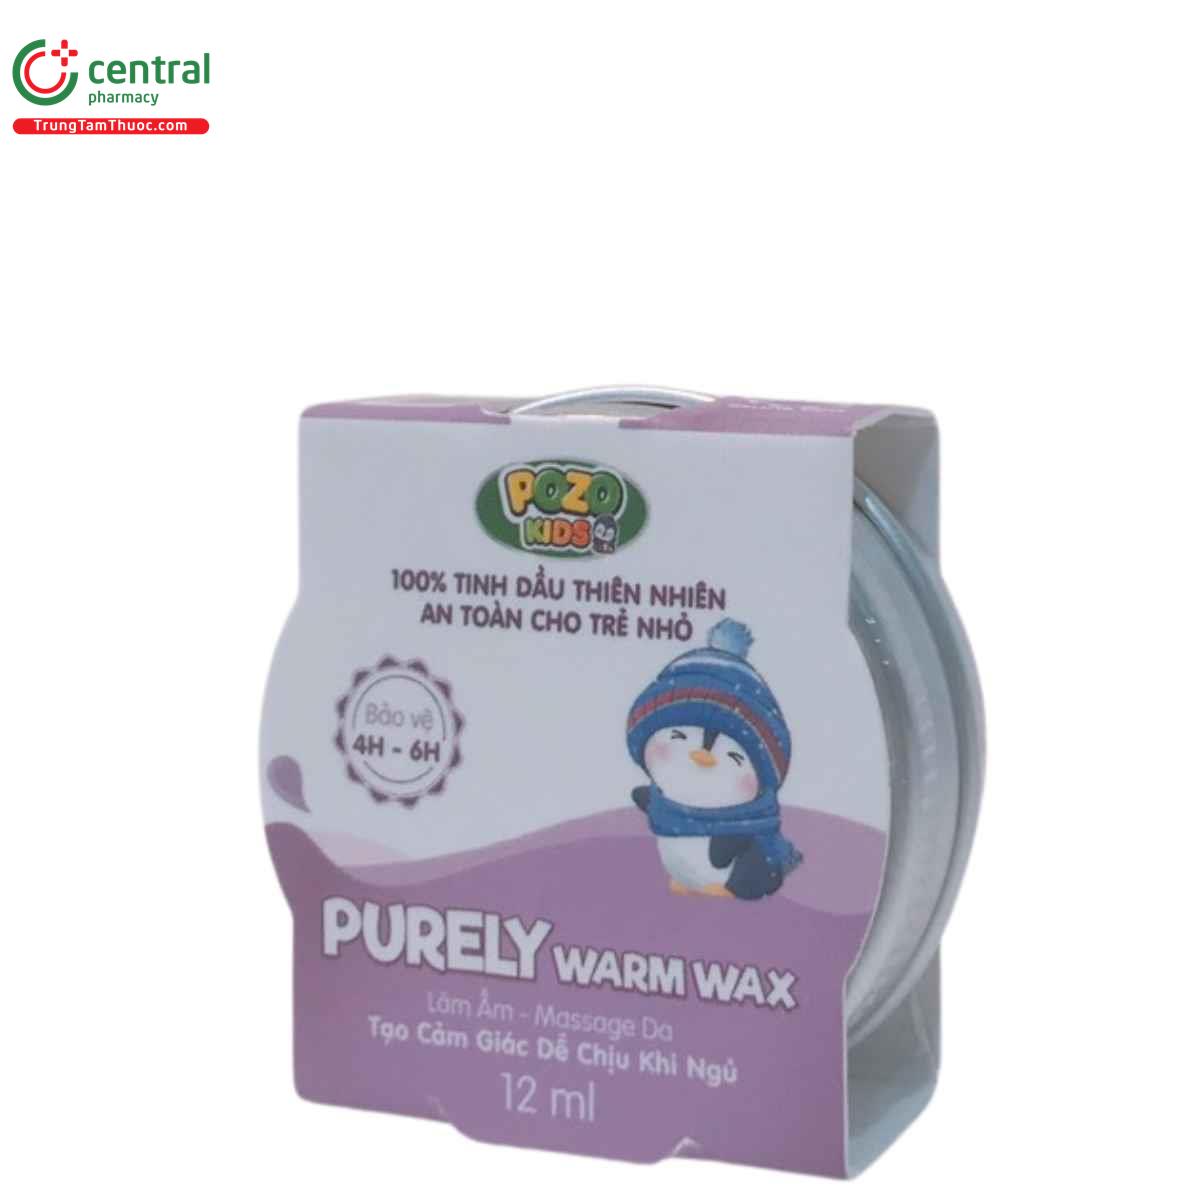 purely warm wax 3 M5357